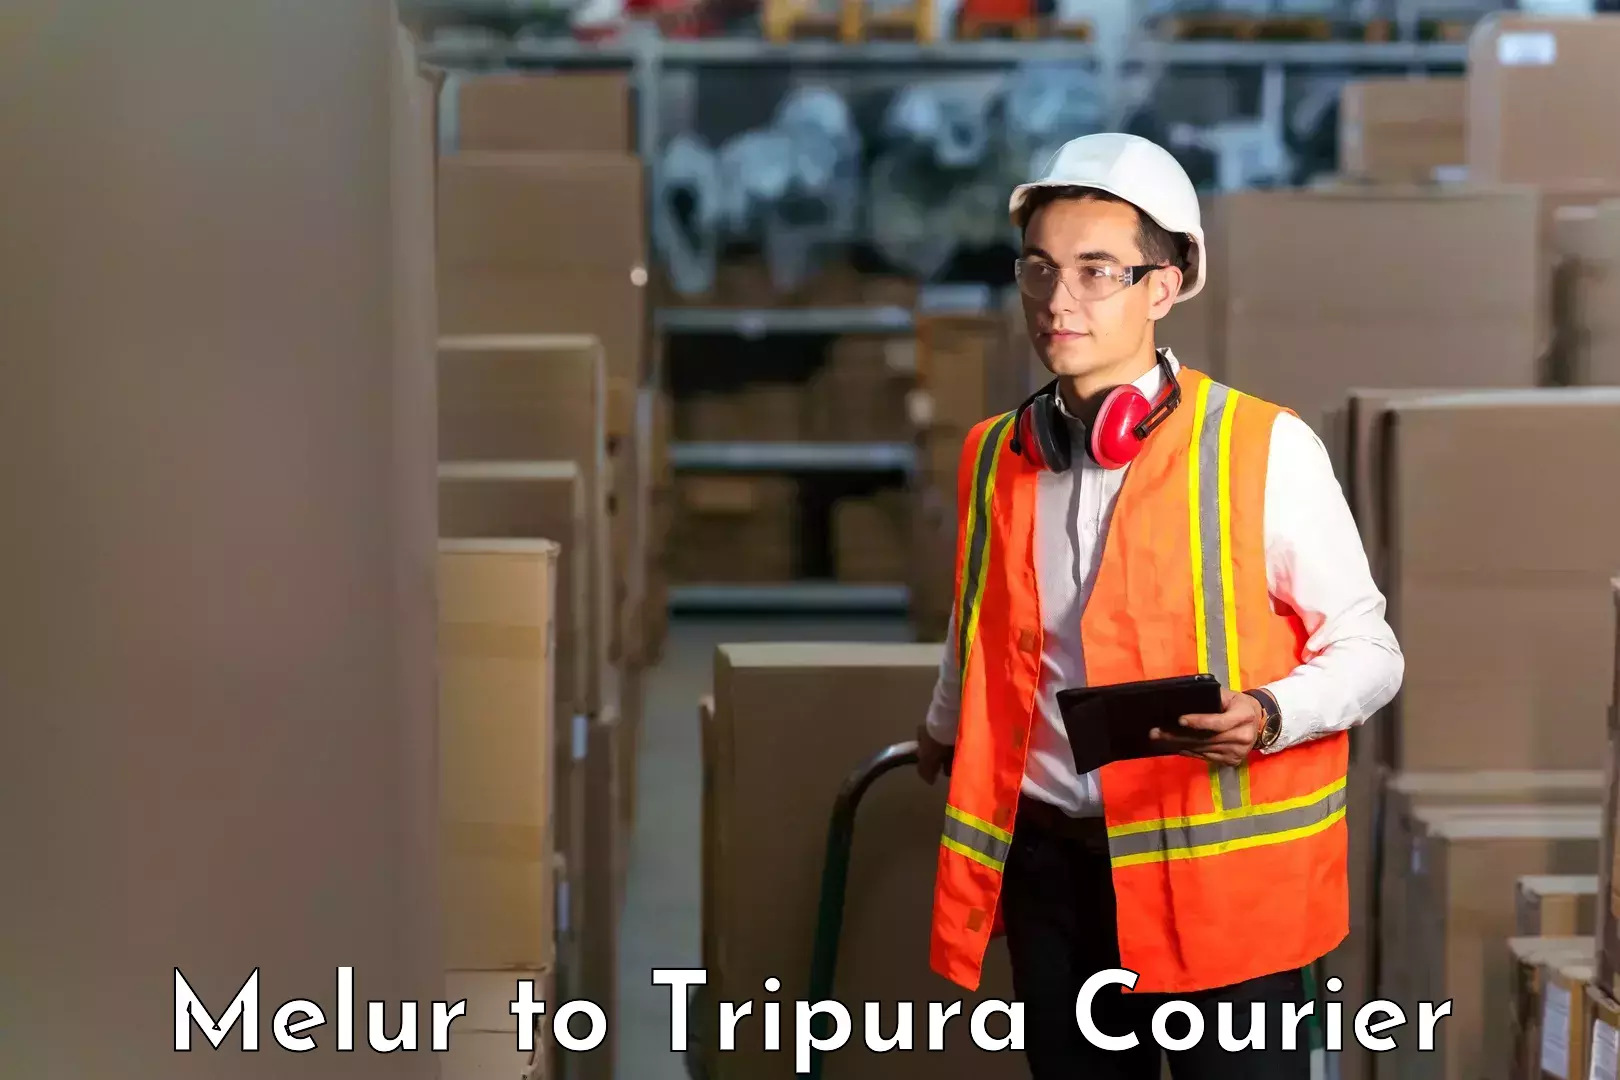 Bulk courier orders in Melur to Udaipur Tripura